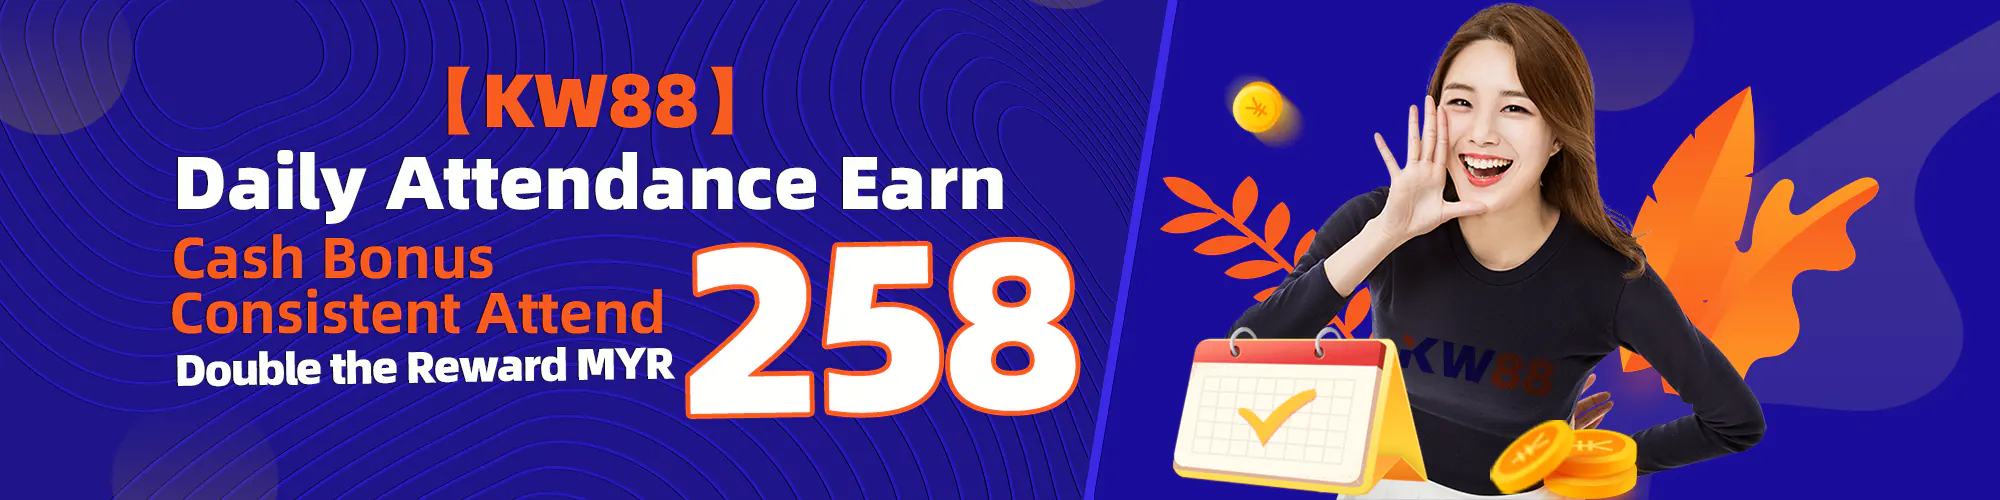 Daily Attendance Earn Cash Bonus Consistent Attend, Double the Reward MYR258